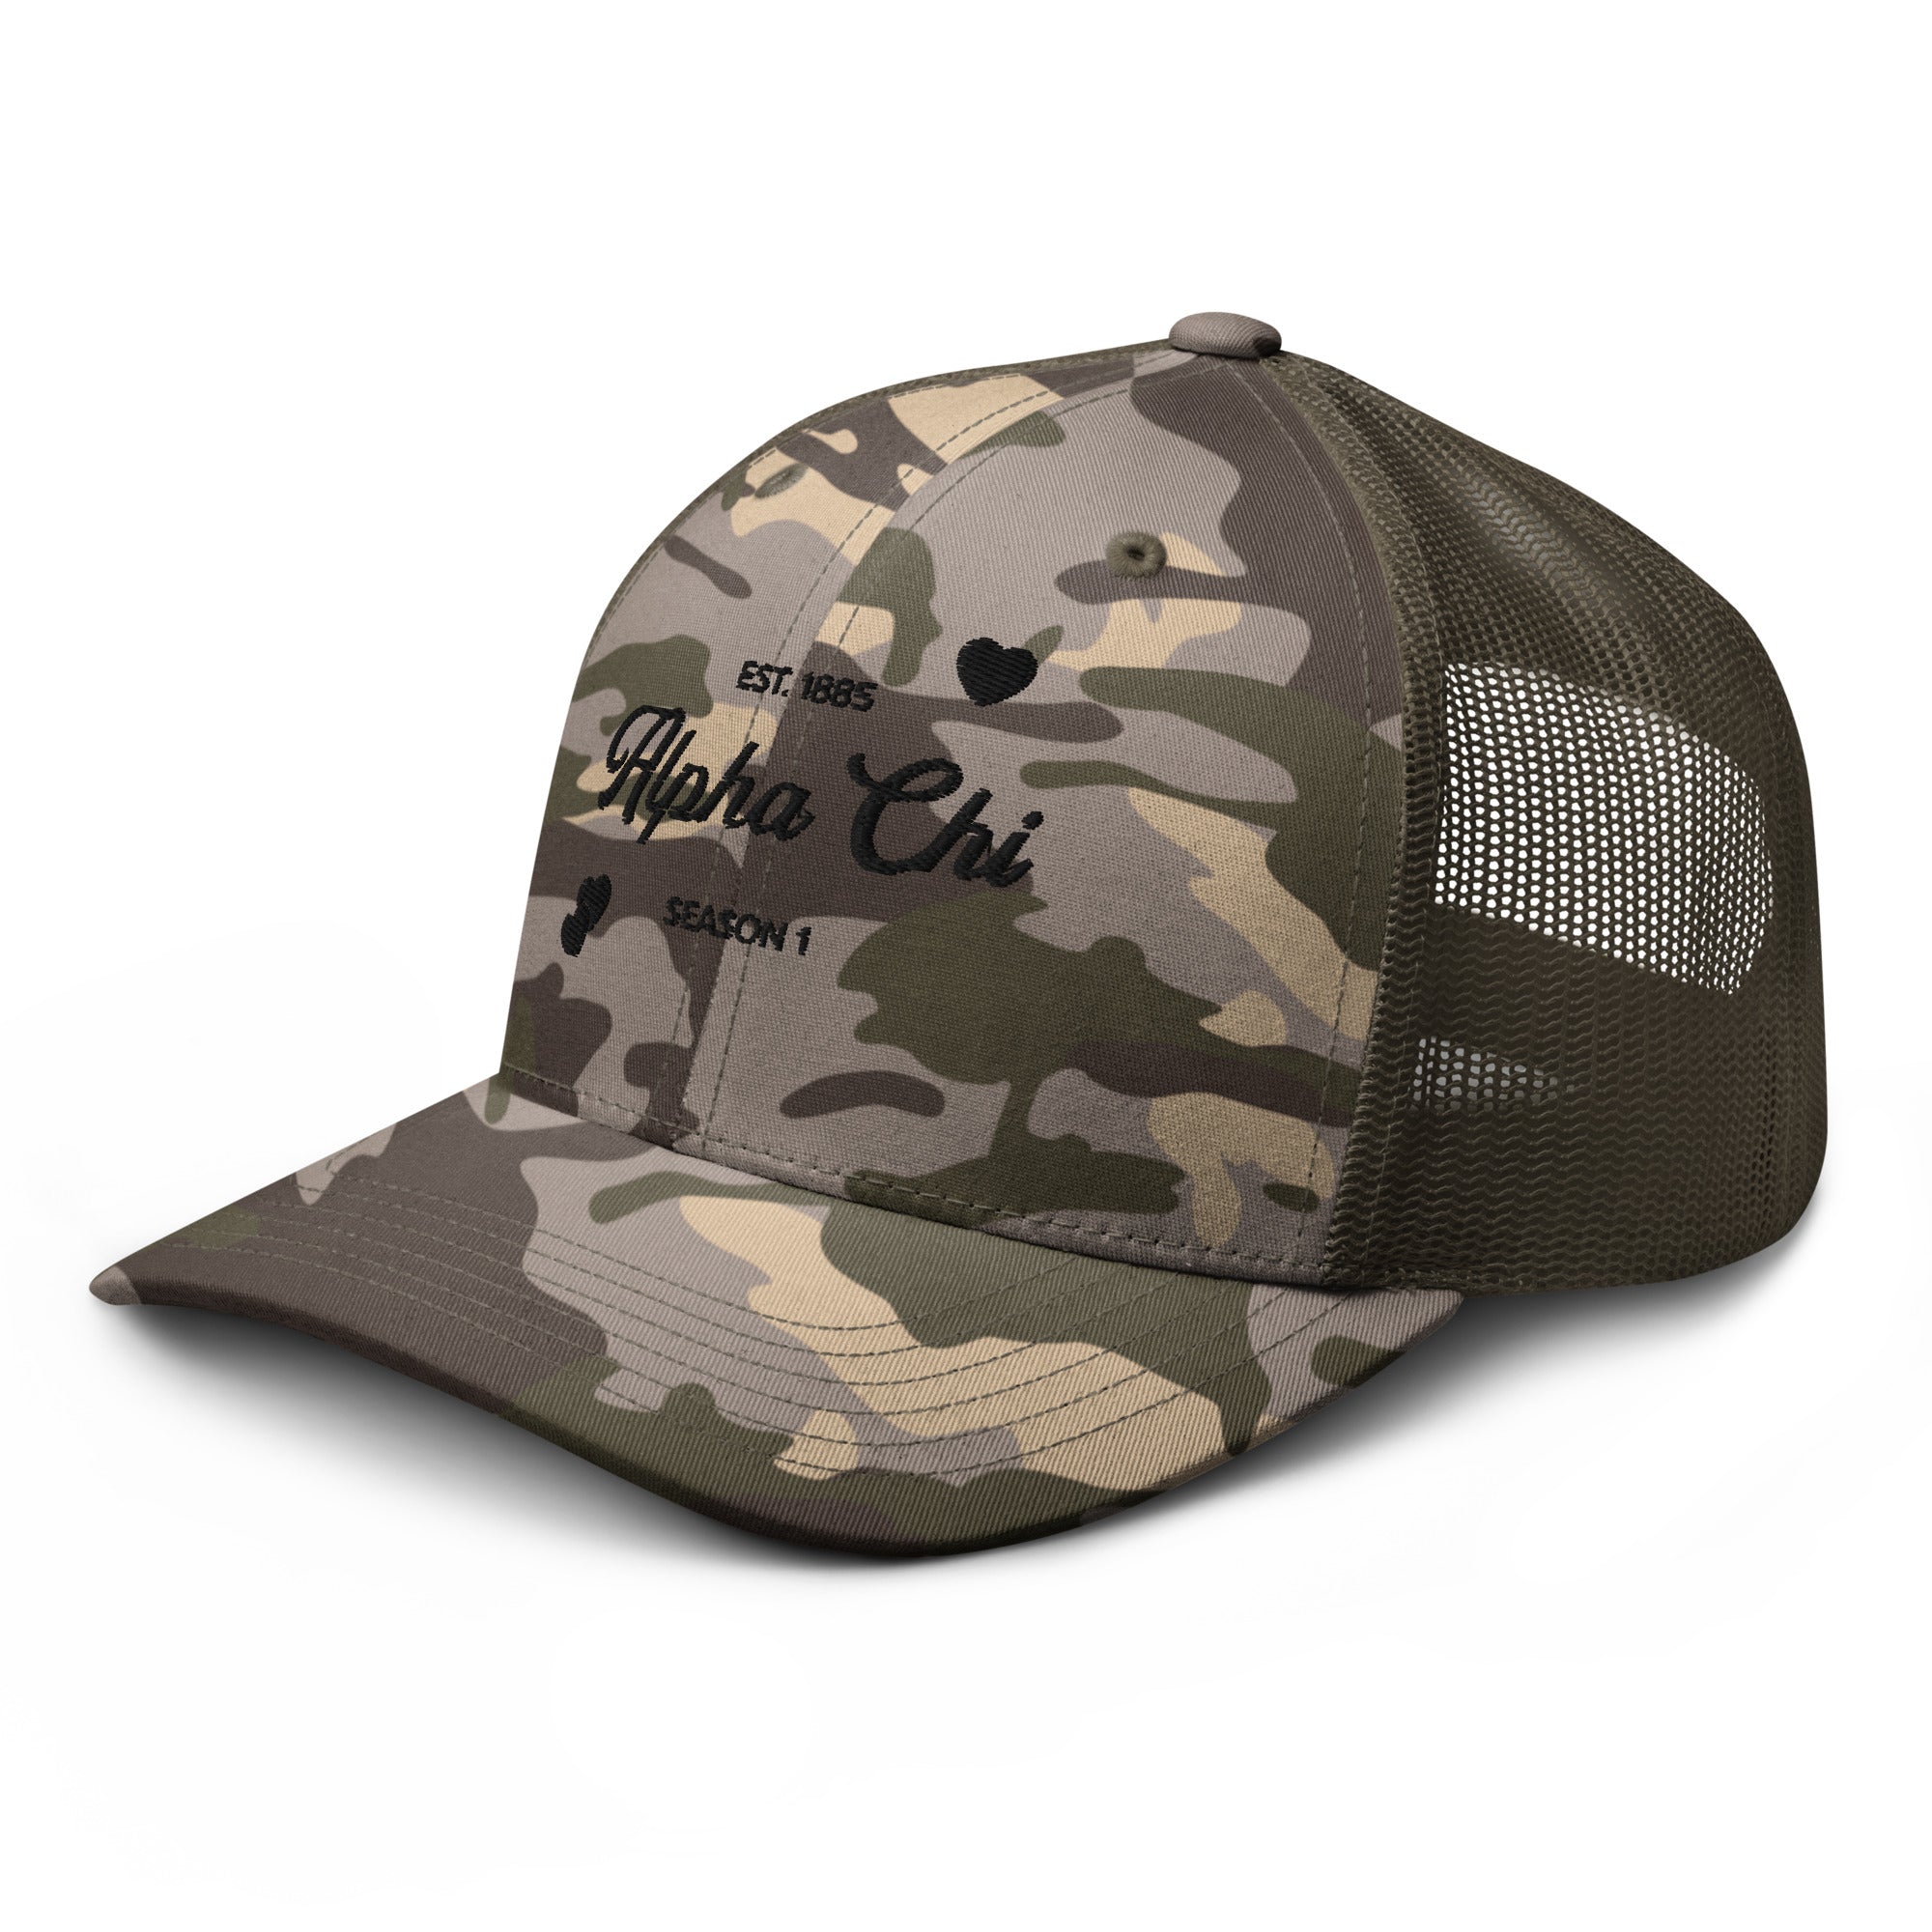 Alpha Chi Omega Camouflage trucker hat